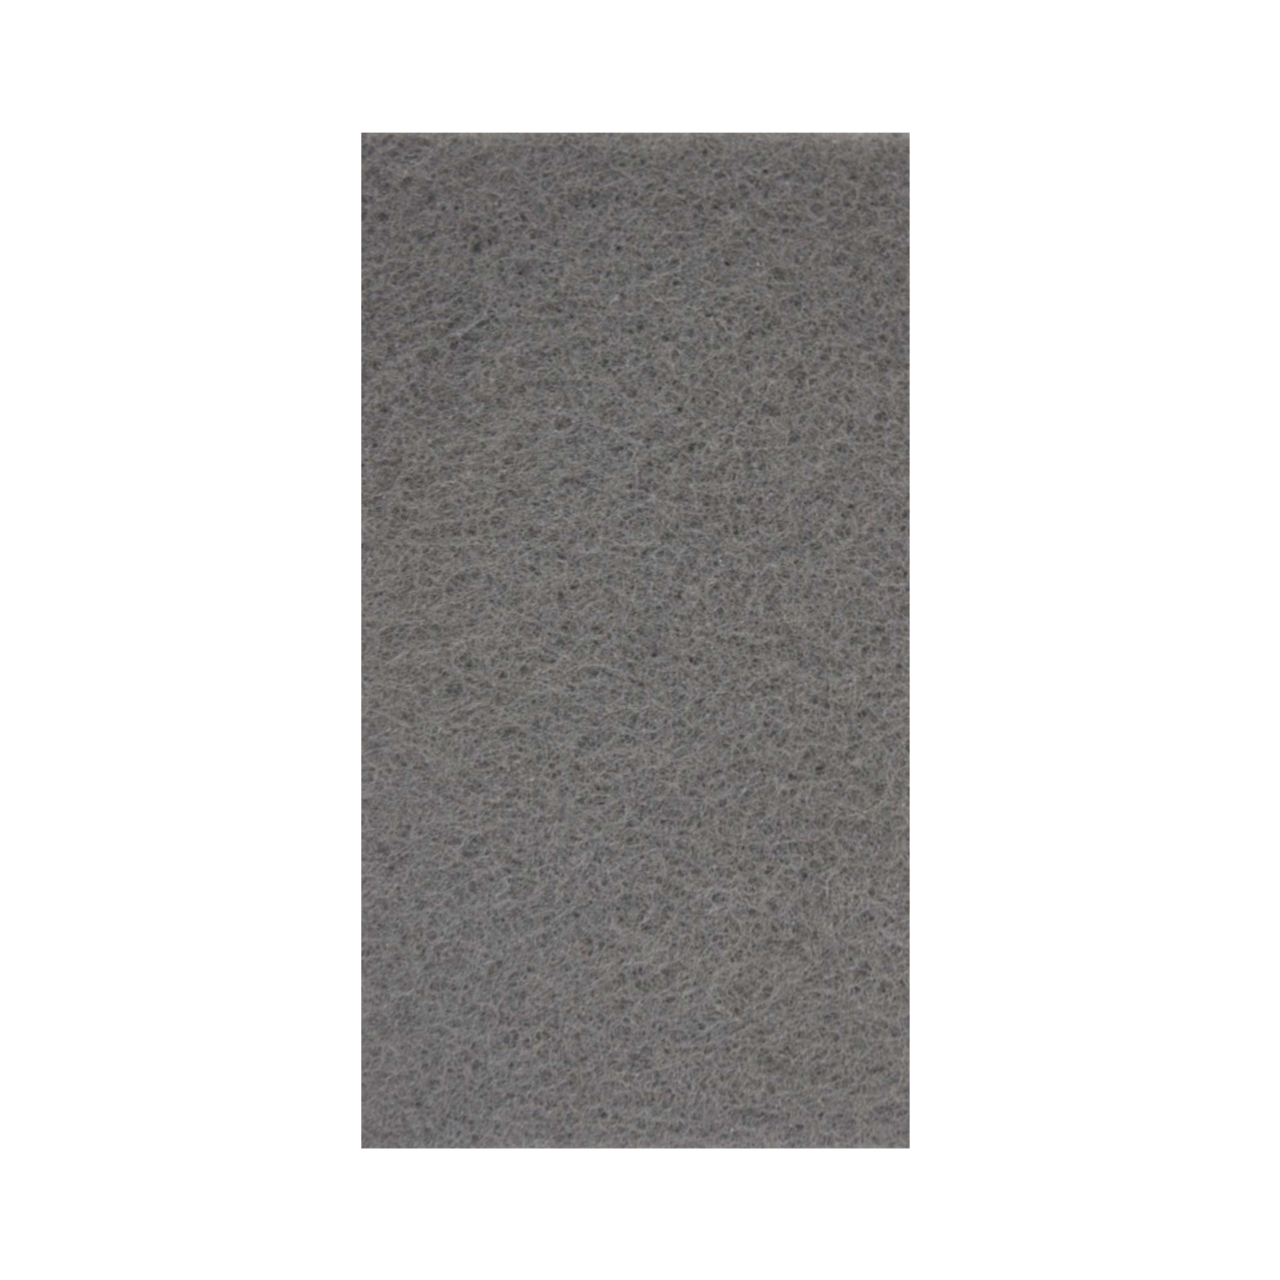 Материал абразивный нетканый серый Mirlon ultra fine P1500 115х230 (25шт\уп) Mirka 8111202594 на сайте RemAutoSnab
